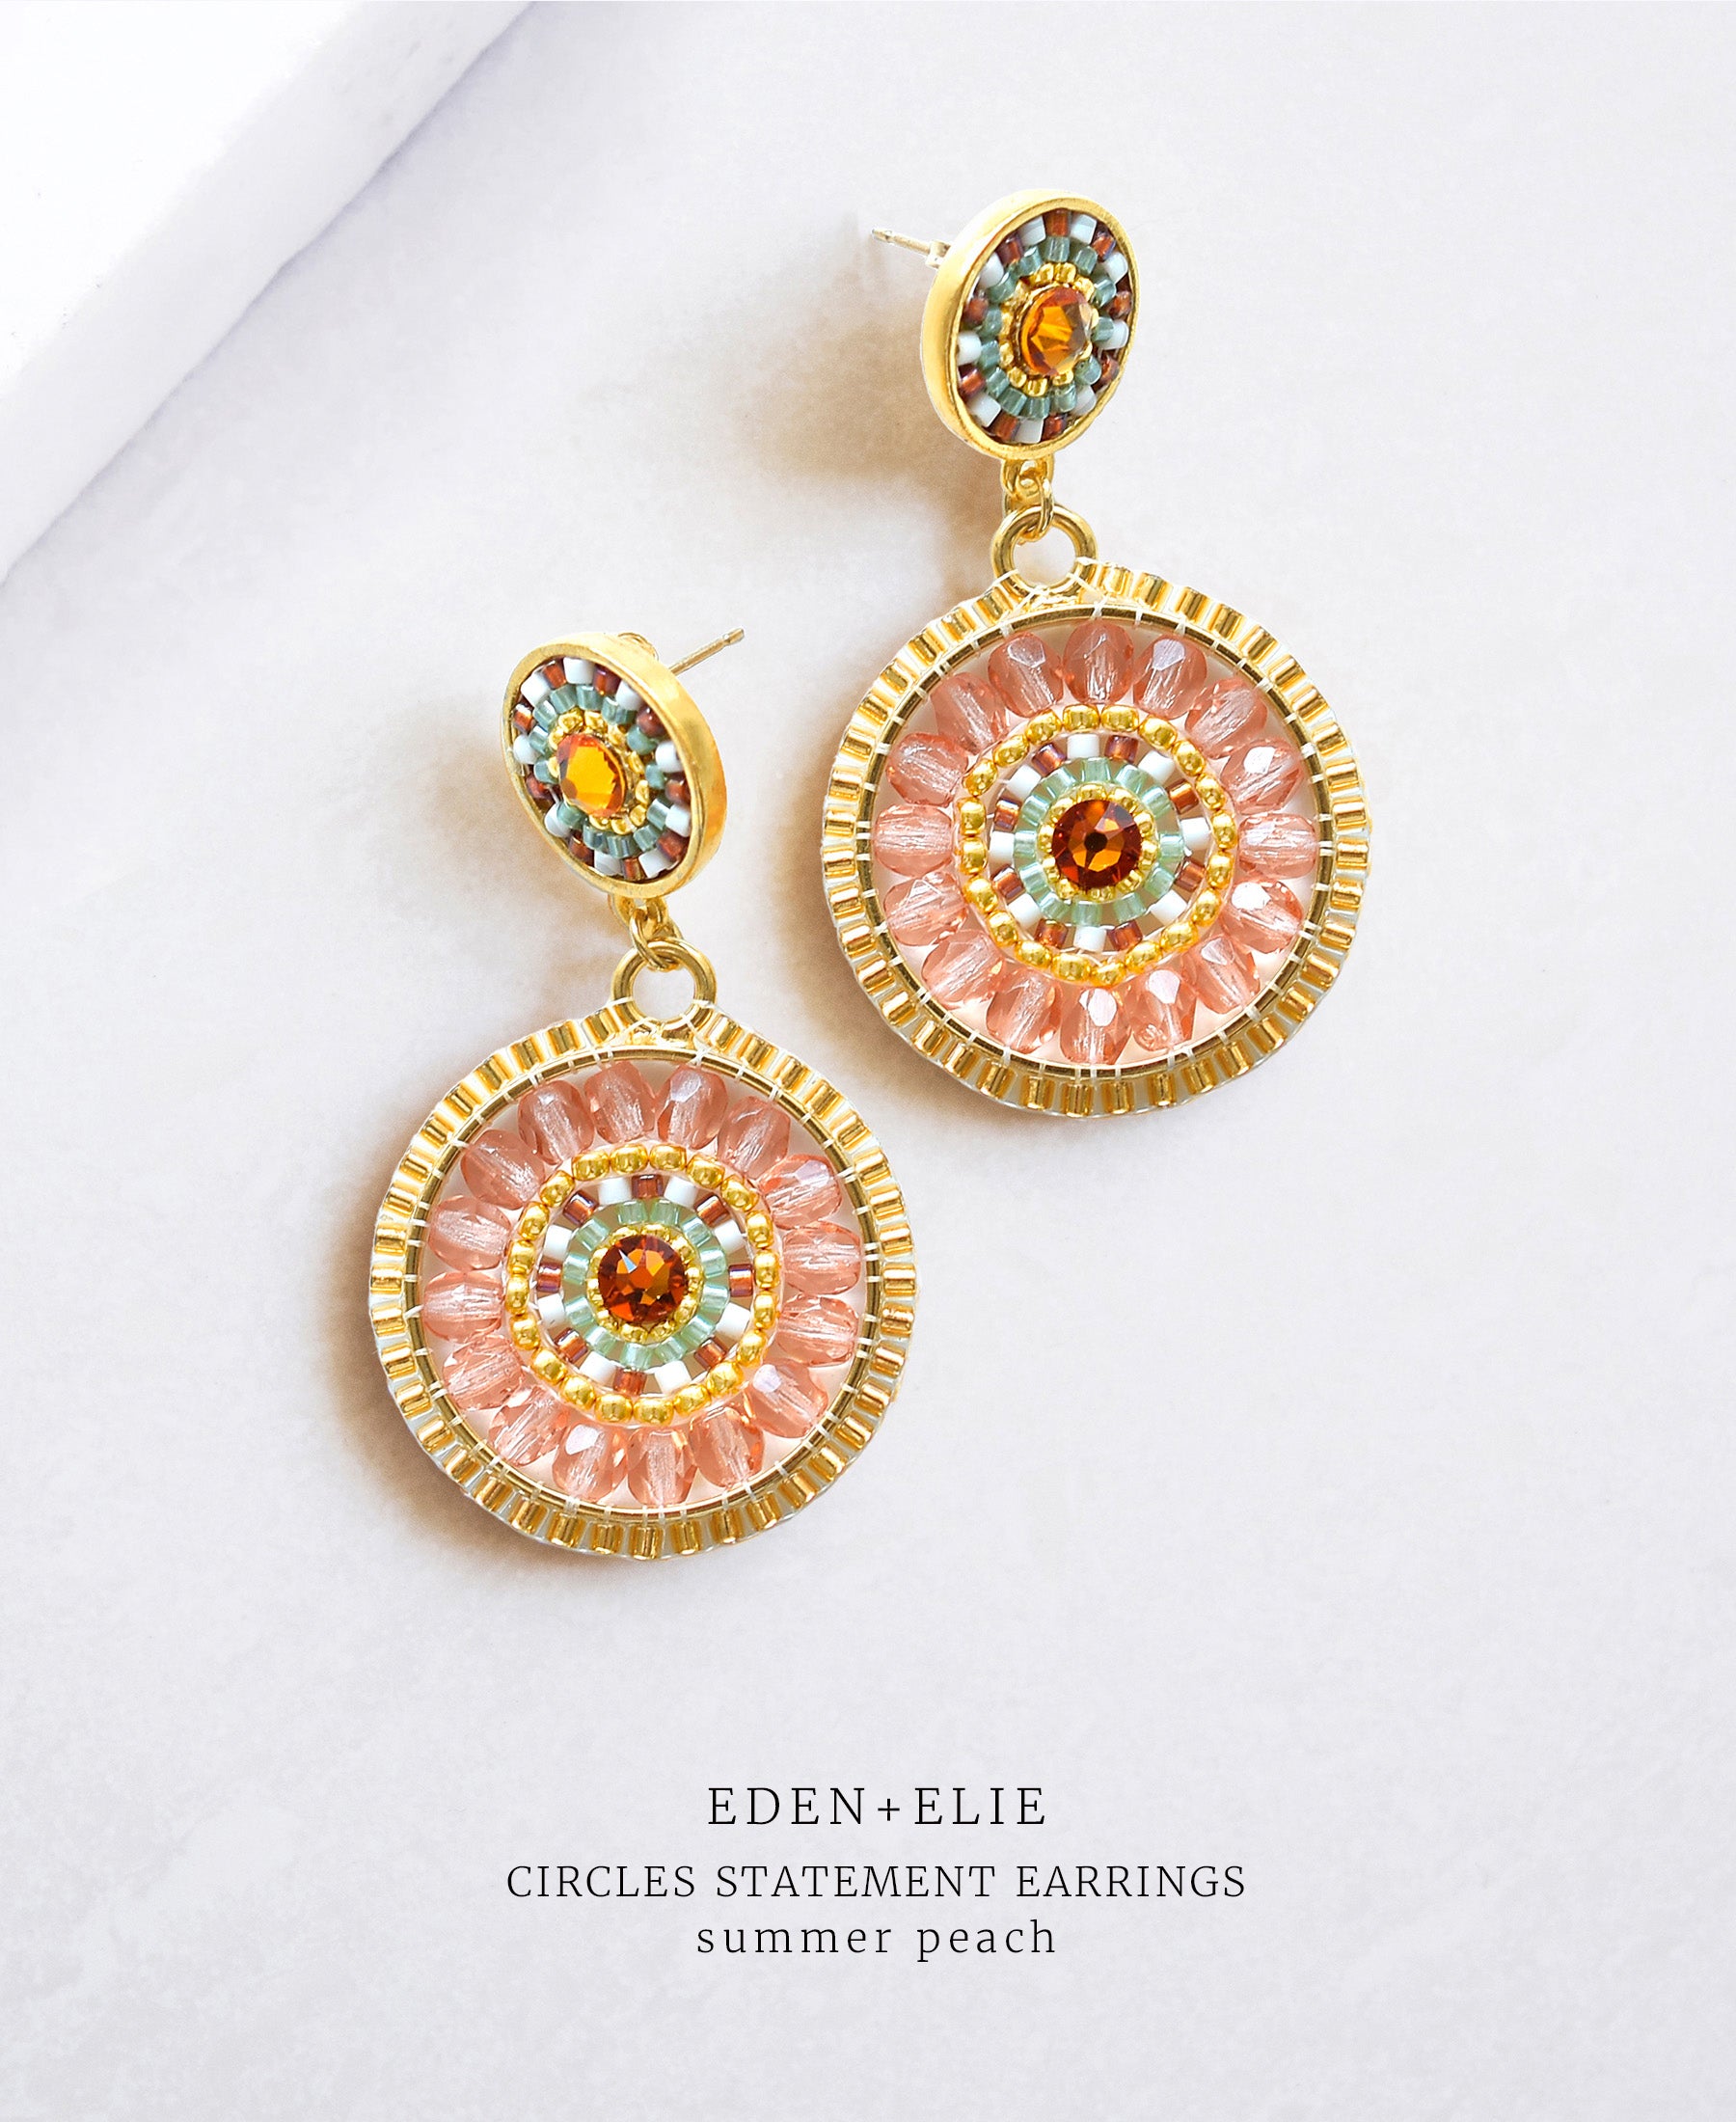 EDEN + ELIE double circle statement drop earrings - summer peach